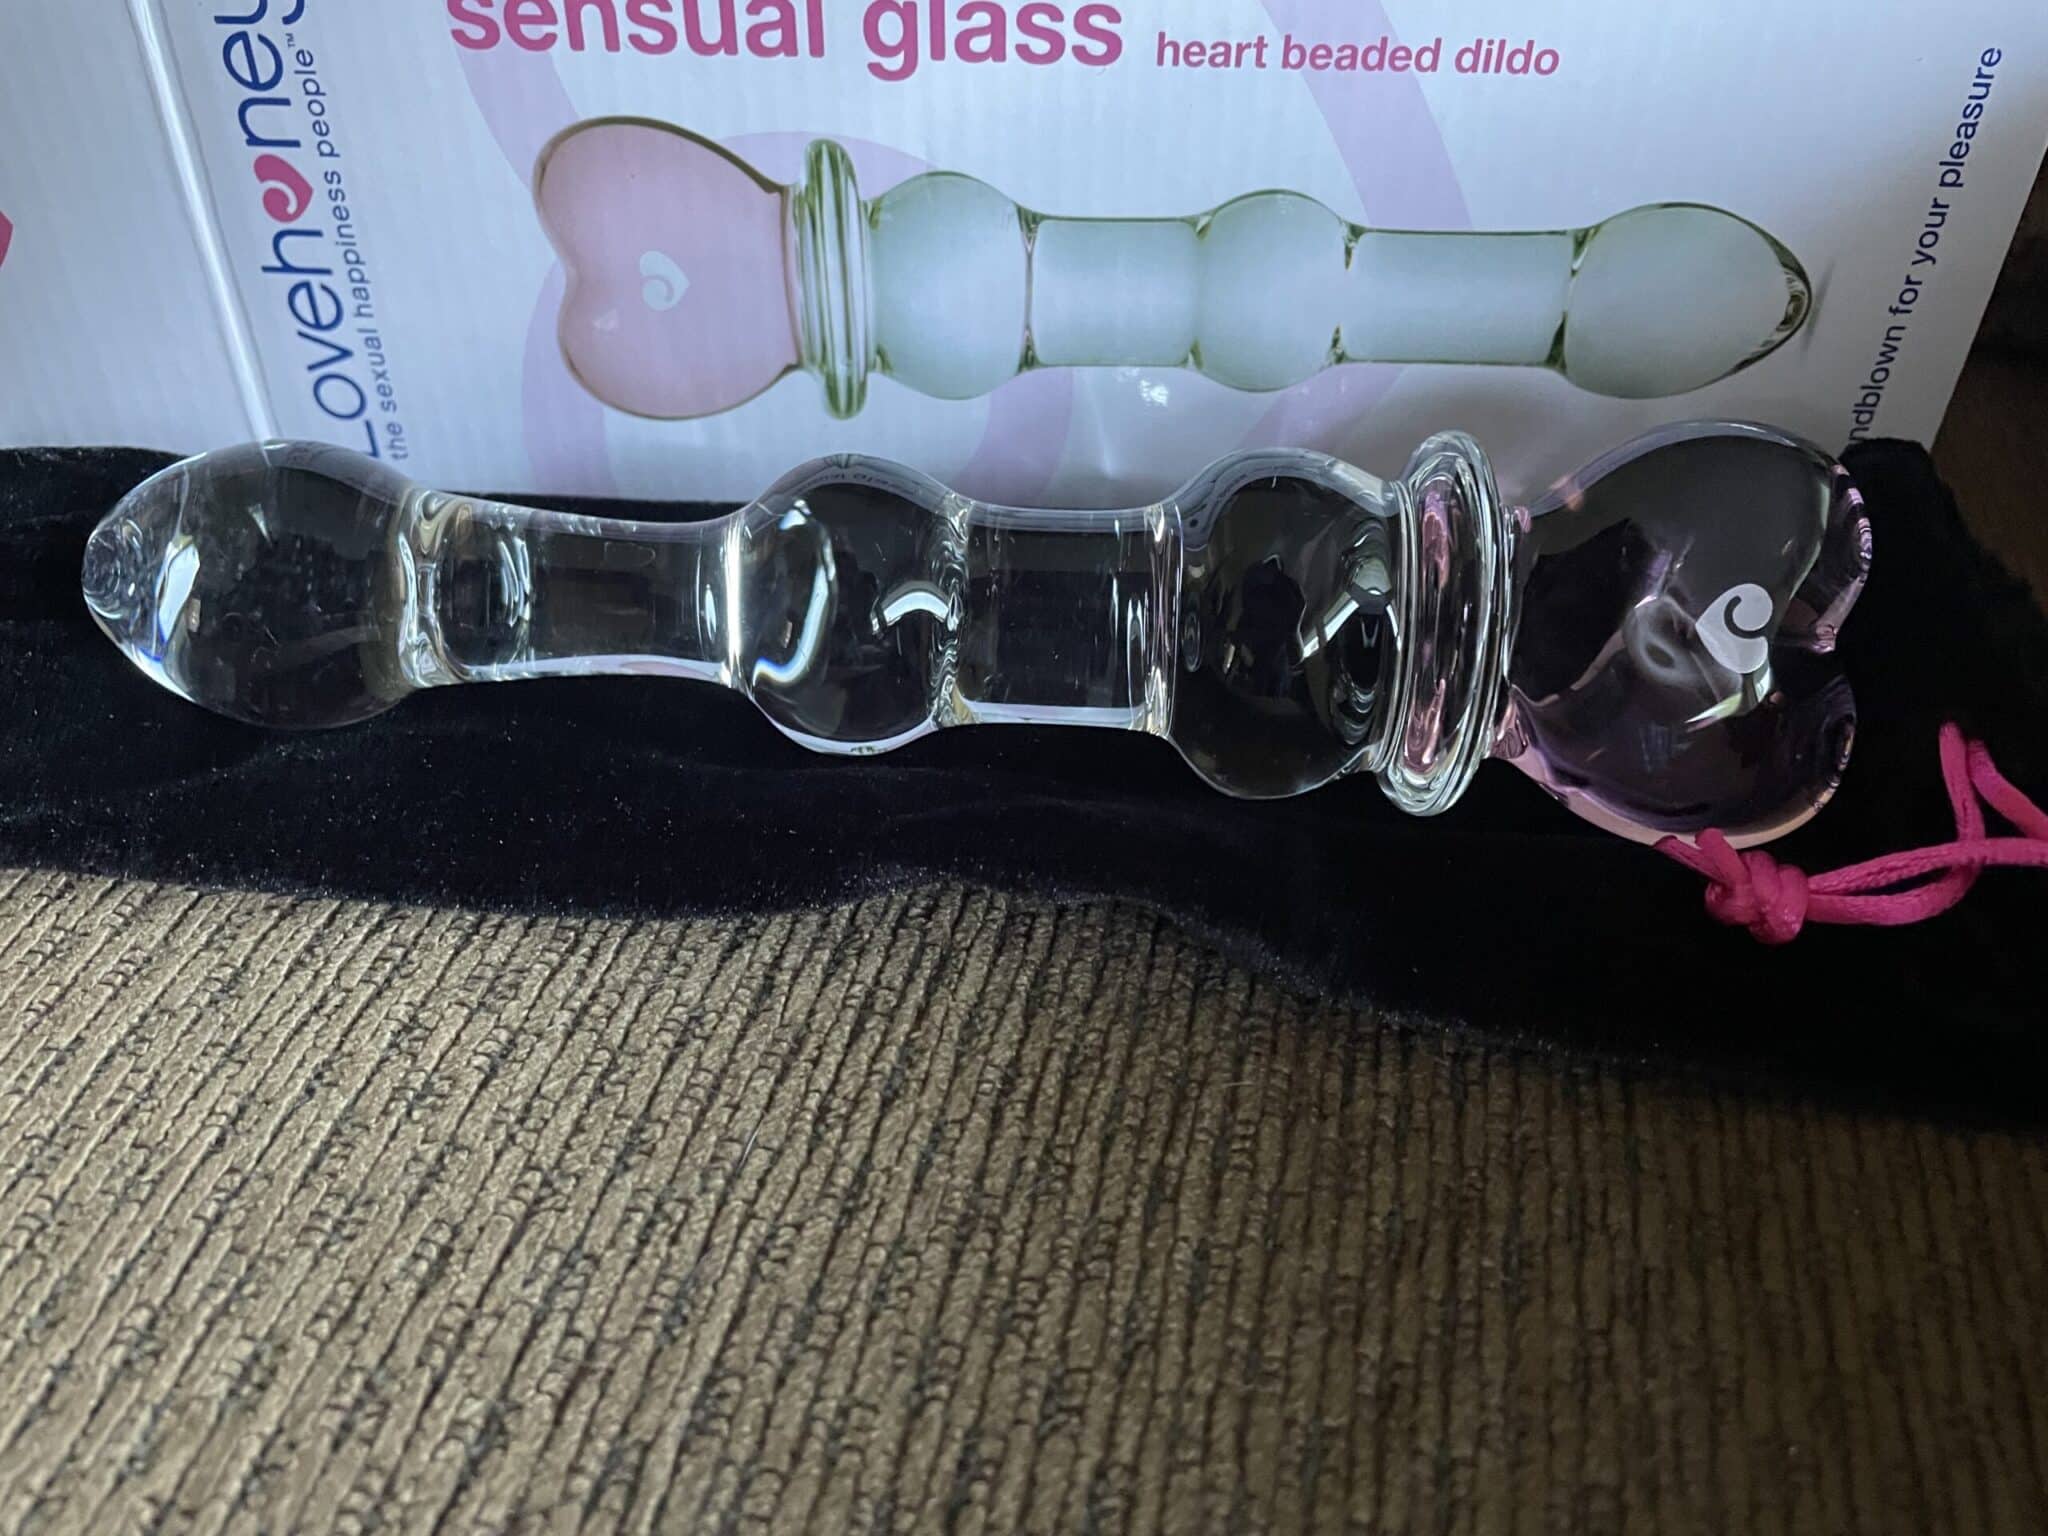 Crystal Heart Glass Dildo Quality Verdict